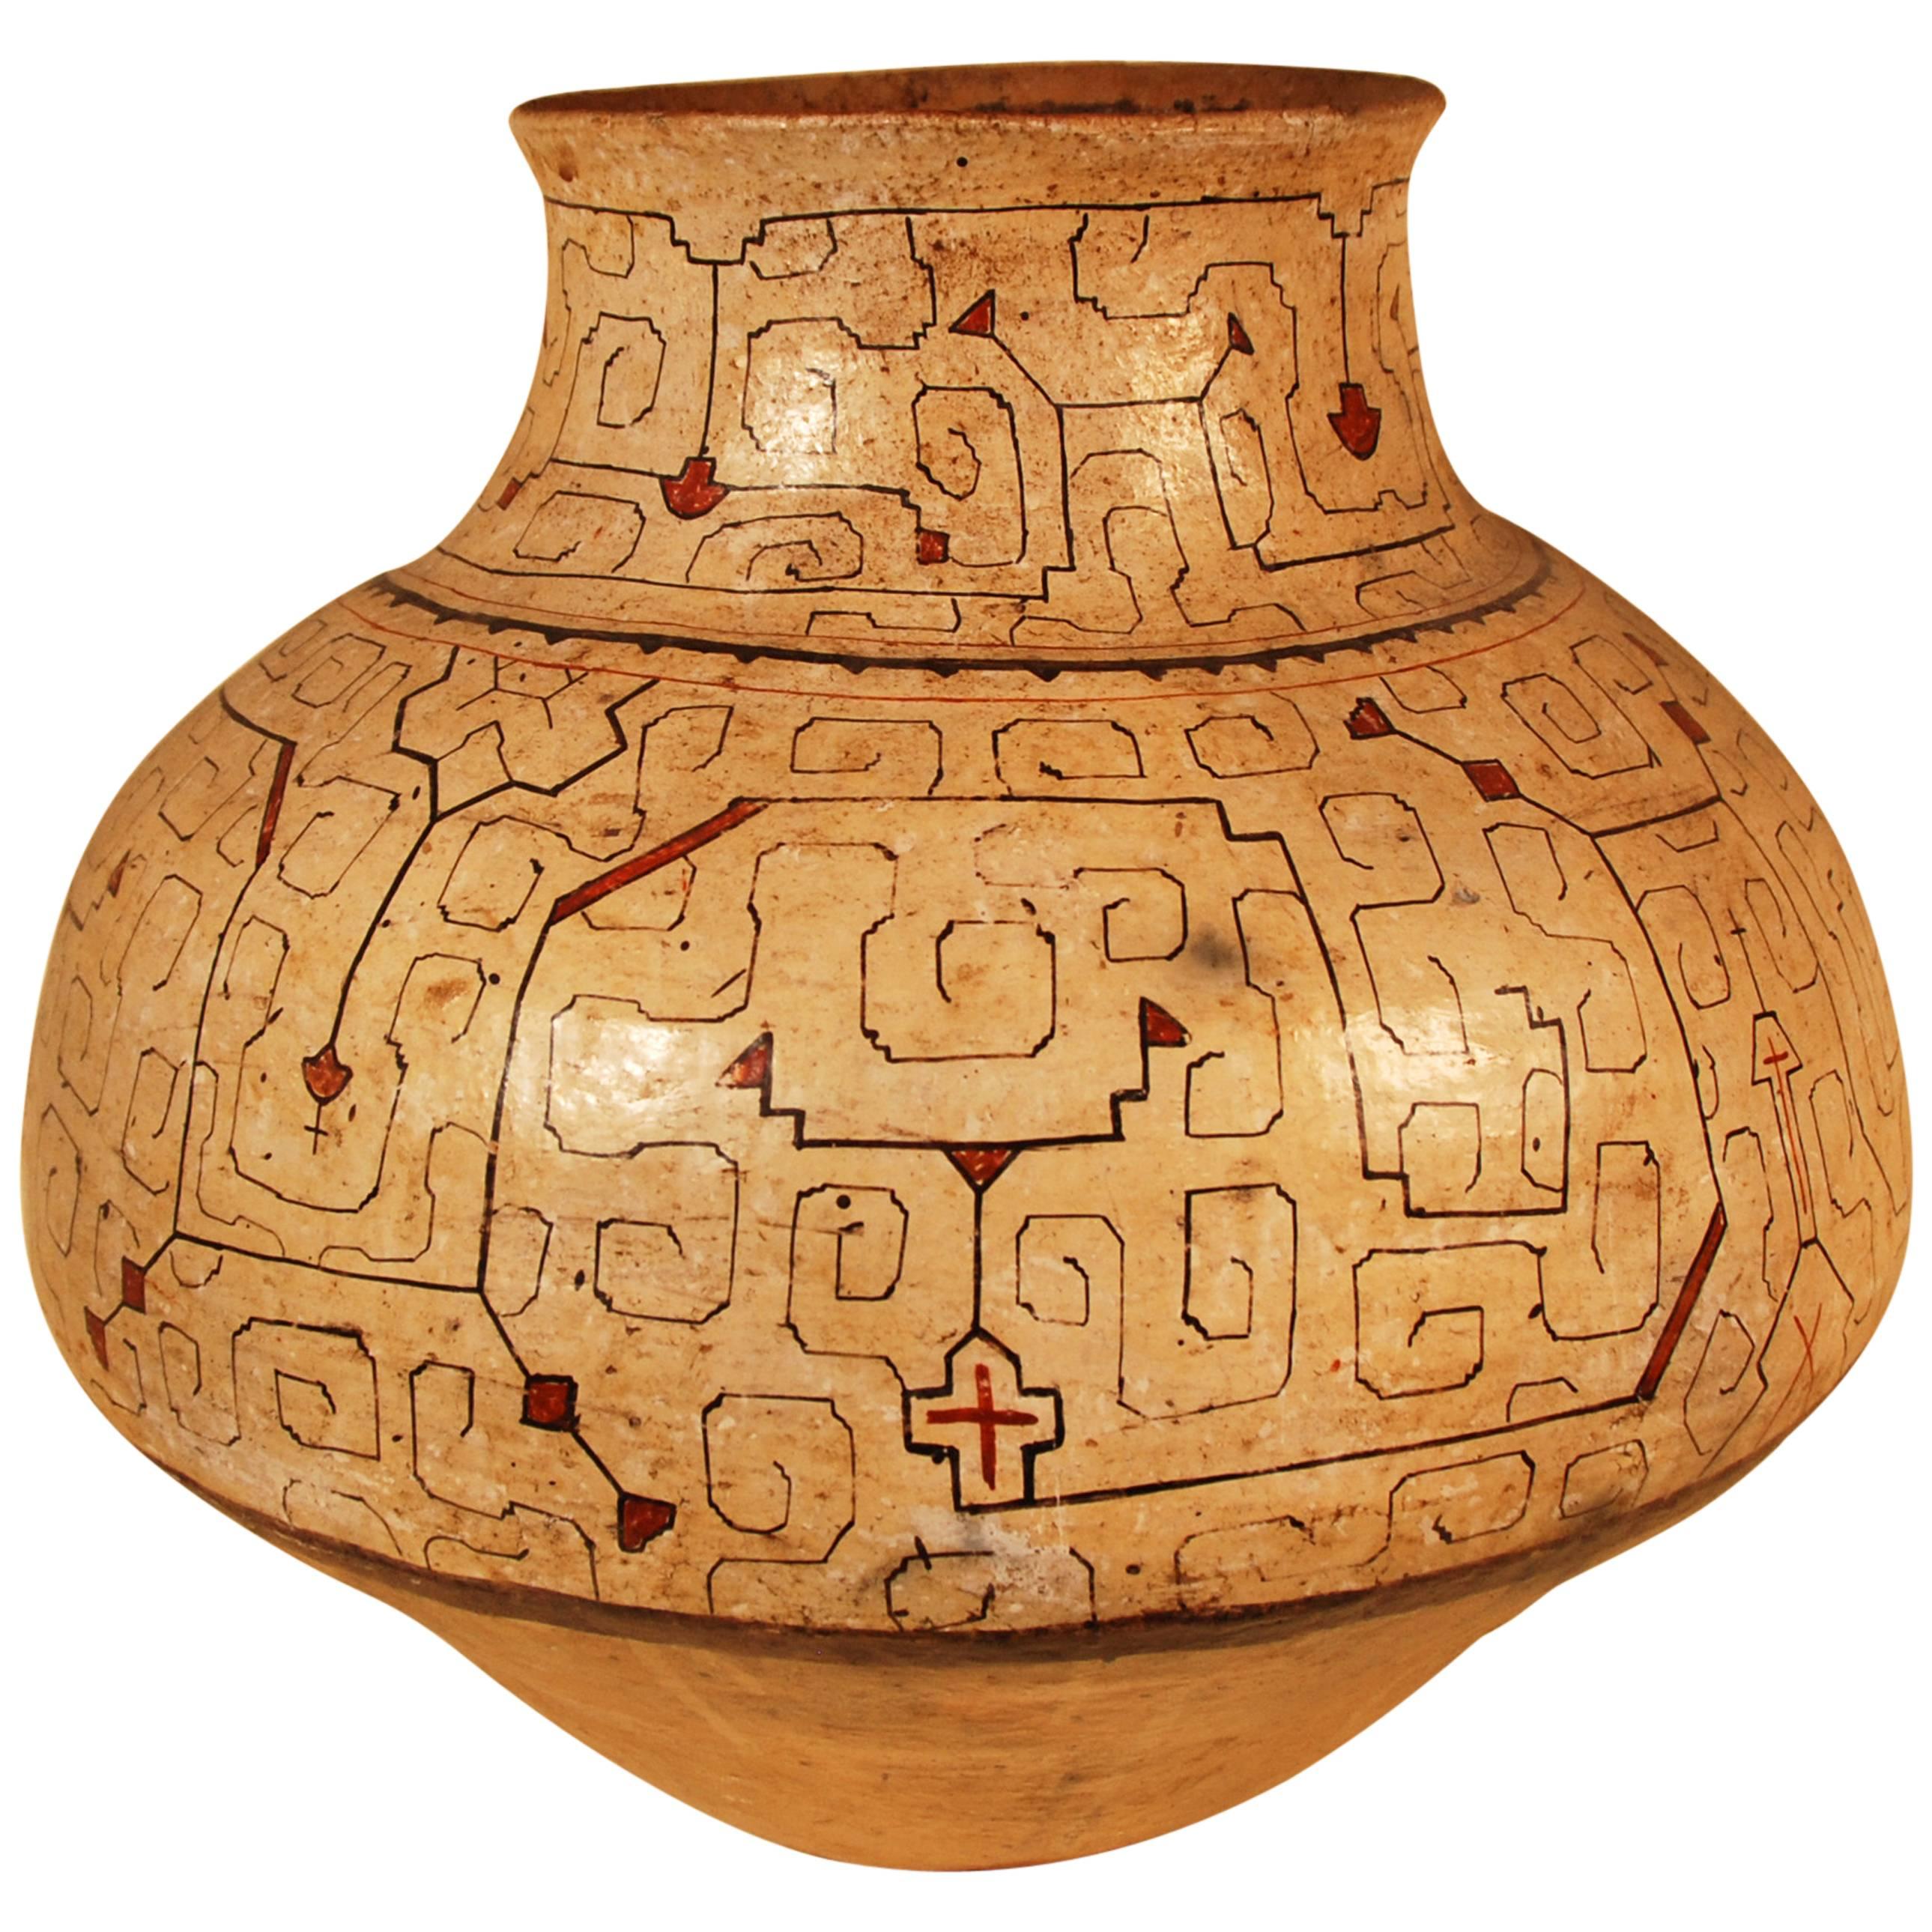 Mid-20th Century Large Tribal Ceramic Pot, Shipibo Culture Peruvian Amazon